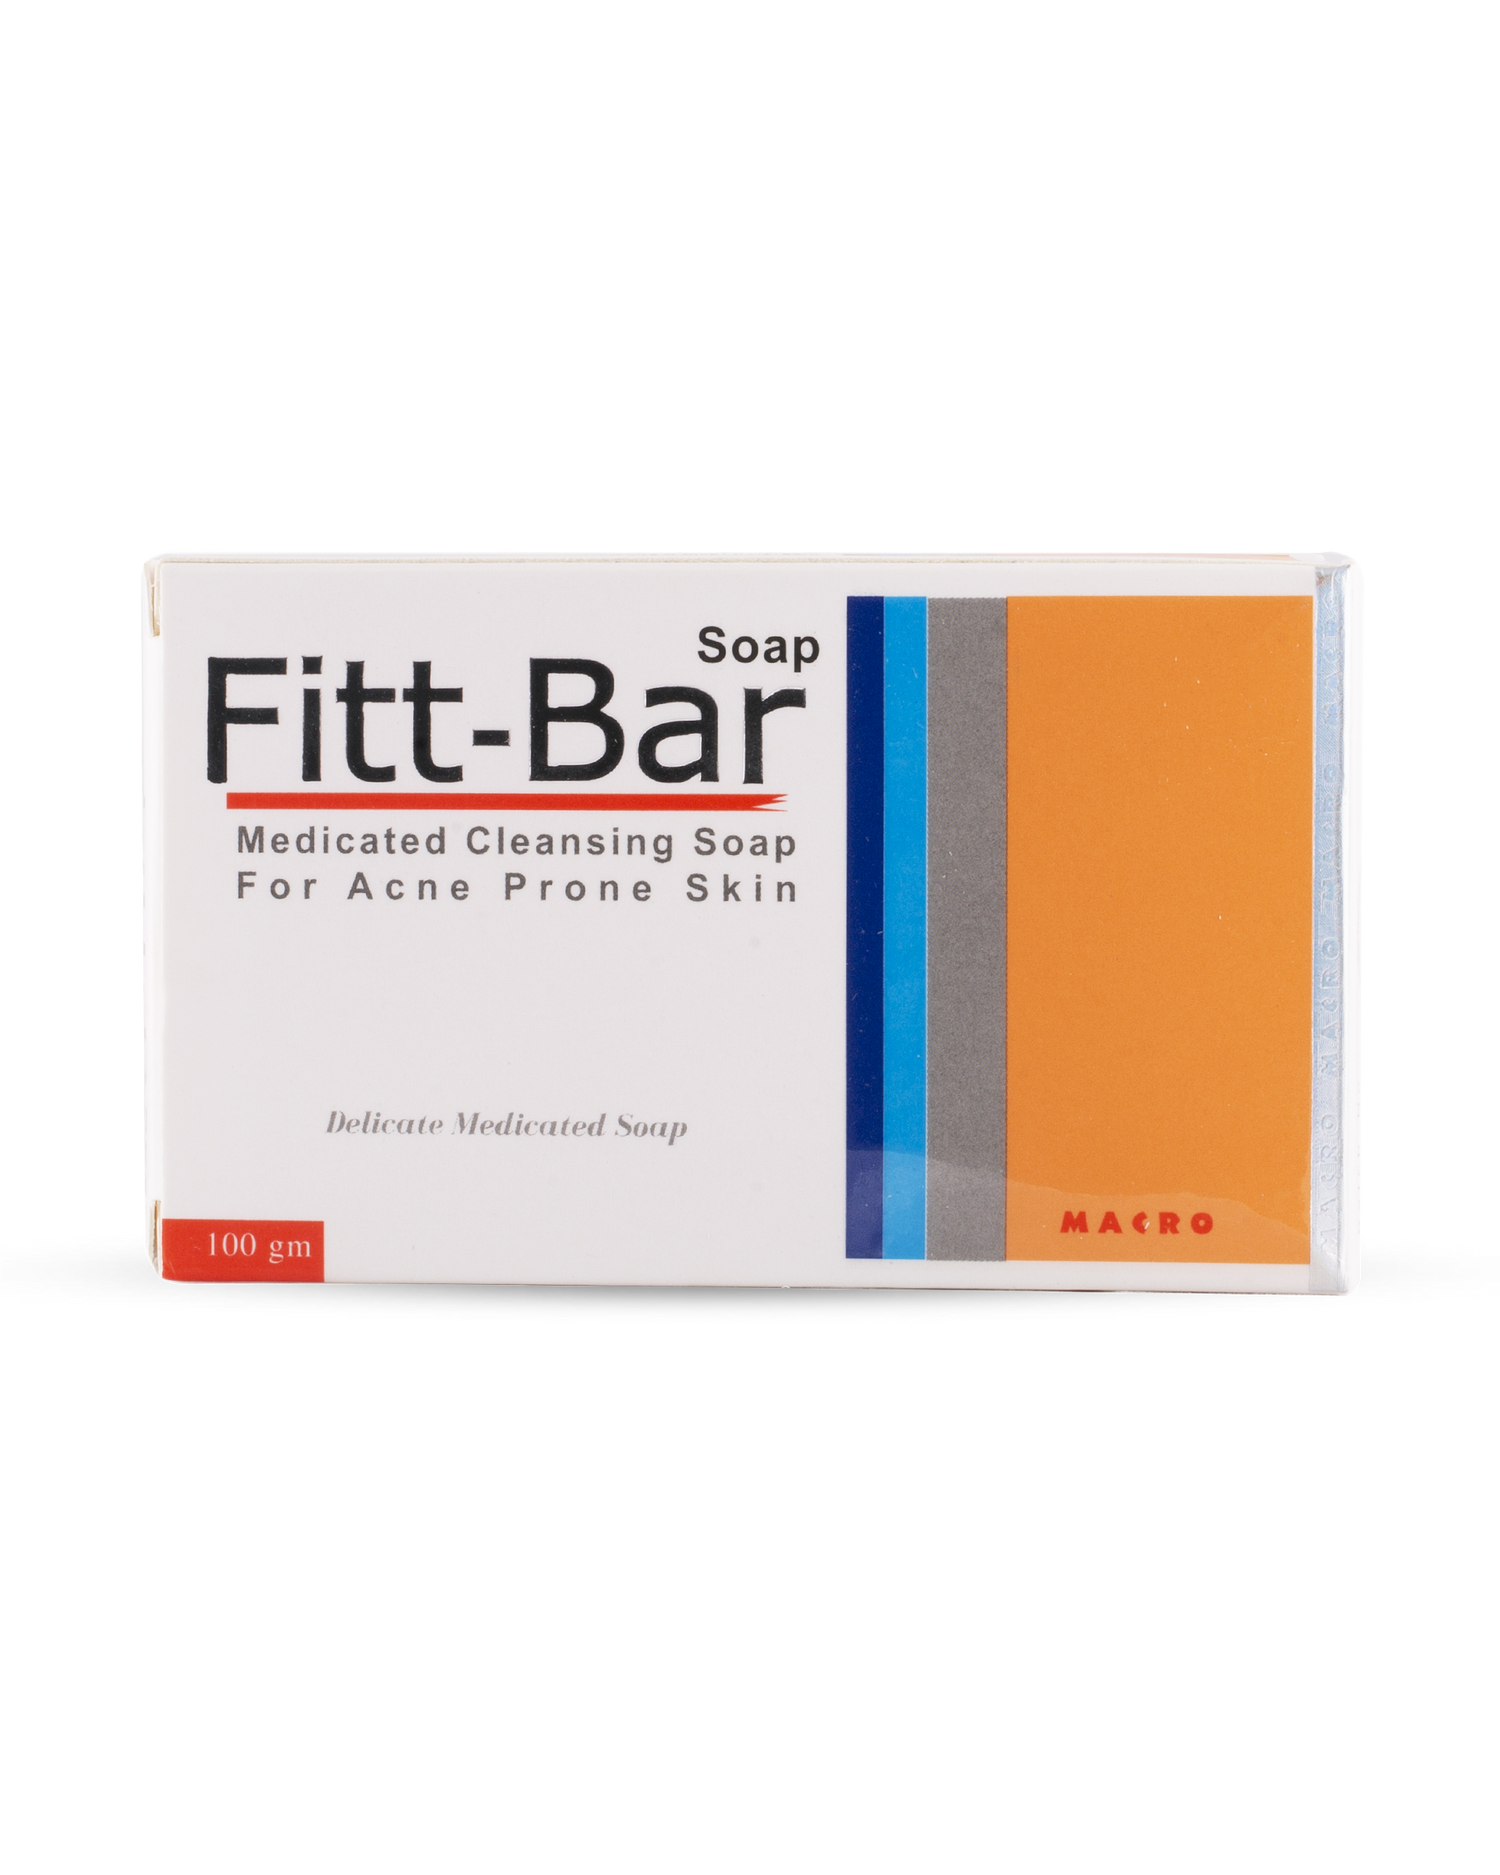 Fitt Bar soap